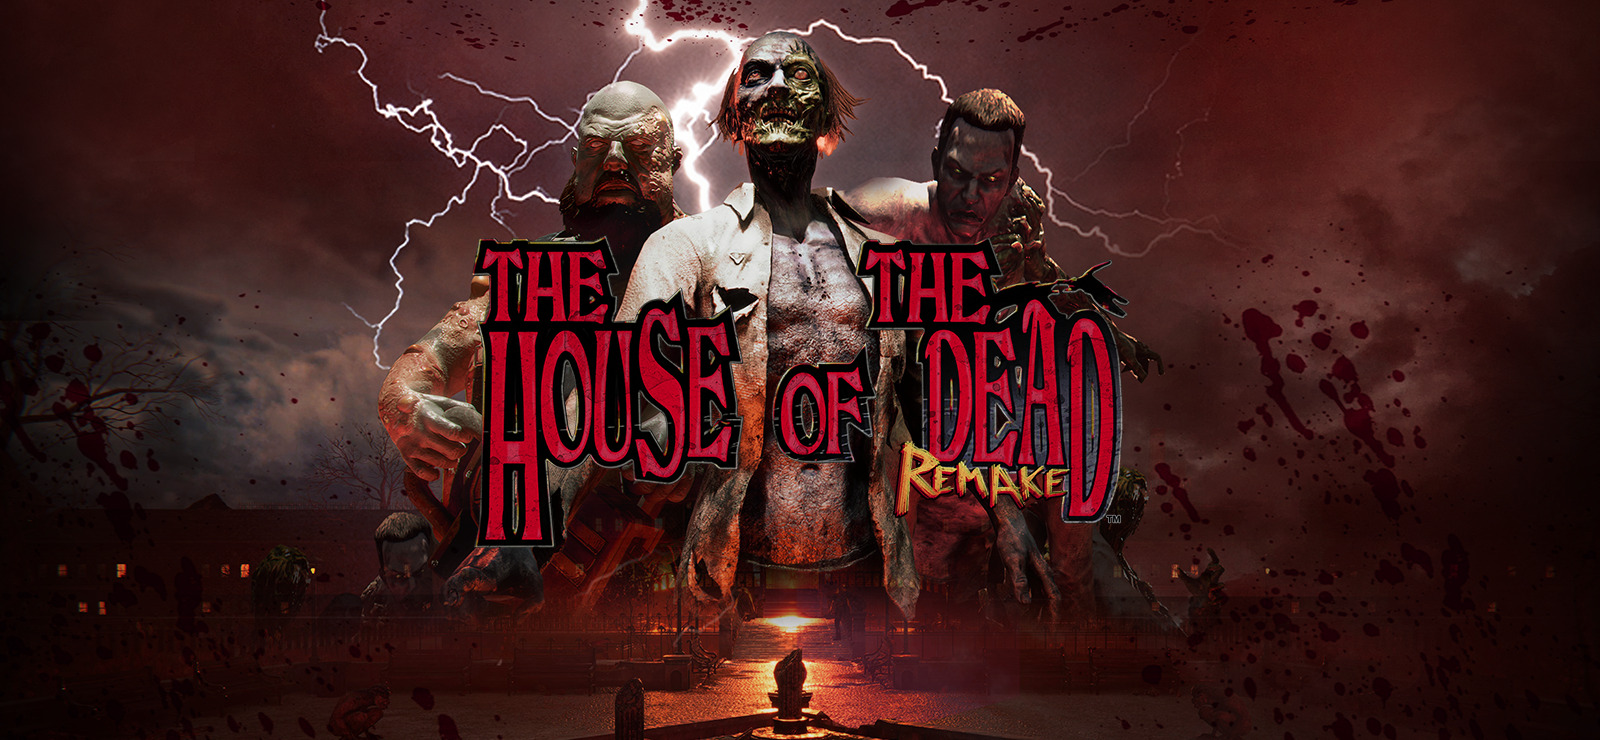 Download THE HOUSE OF THE DEAD Remake v1.1.3-GOG